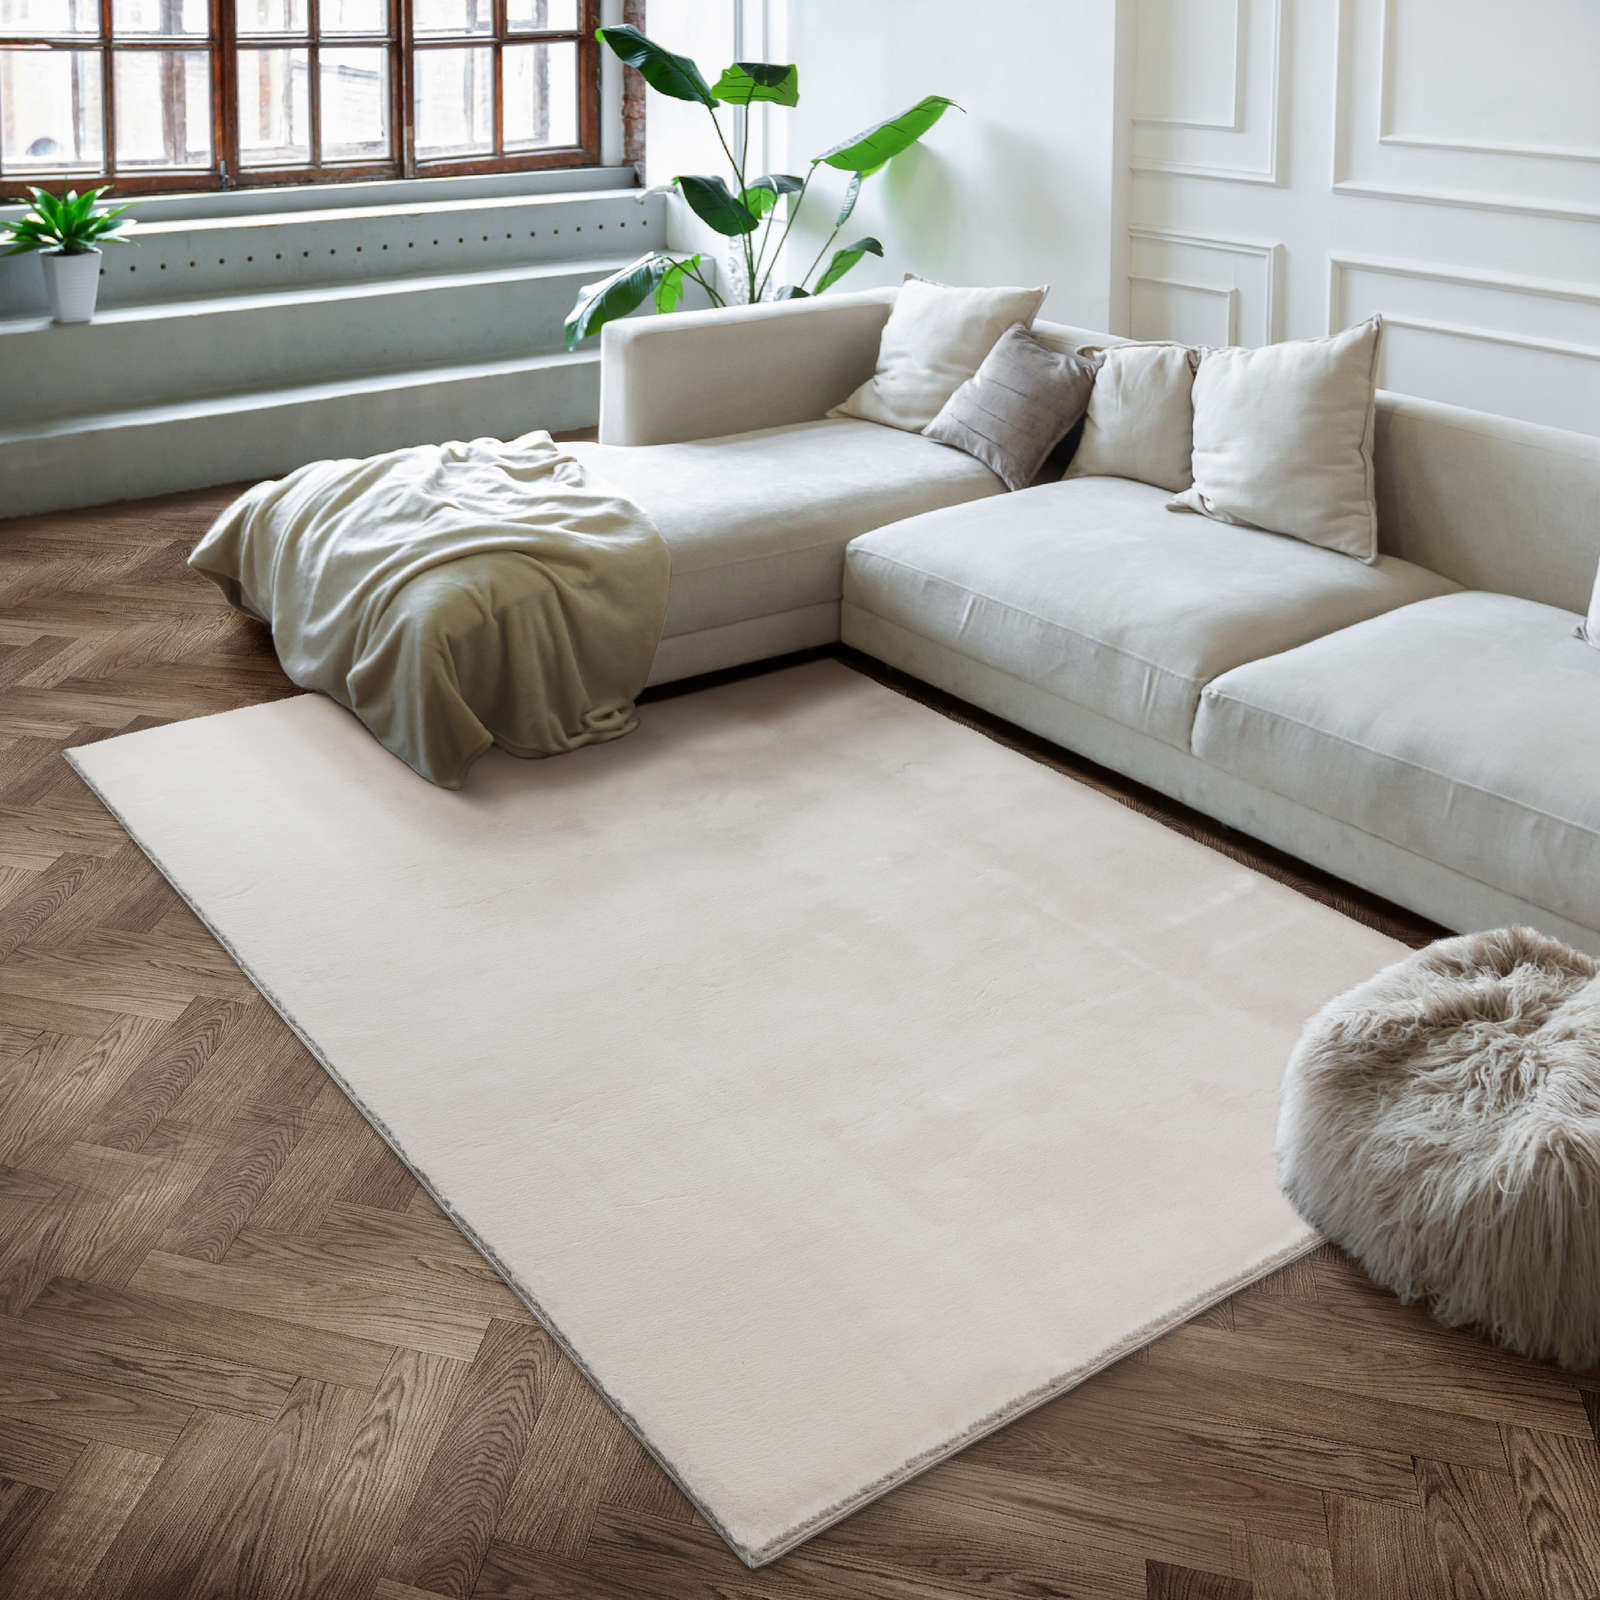             Cuddly soft high pile carpet in light beige - 200 x 140 cm
        